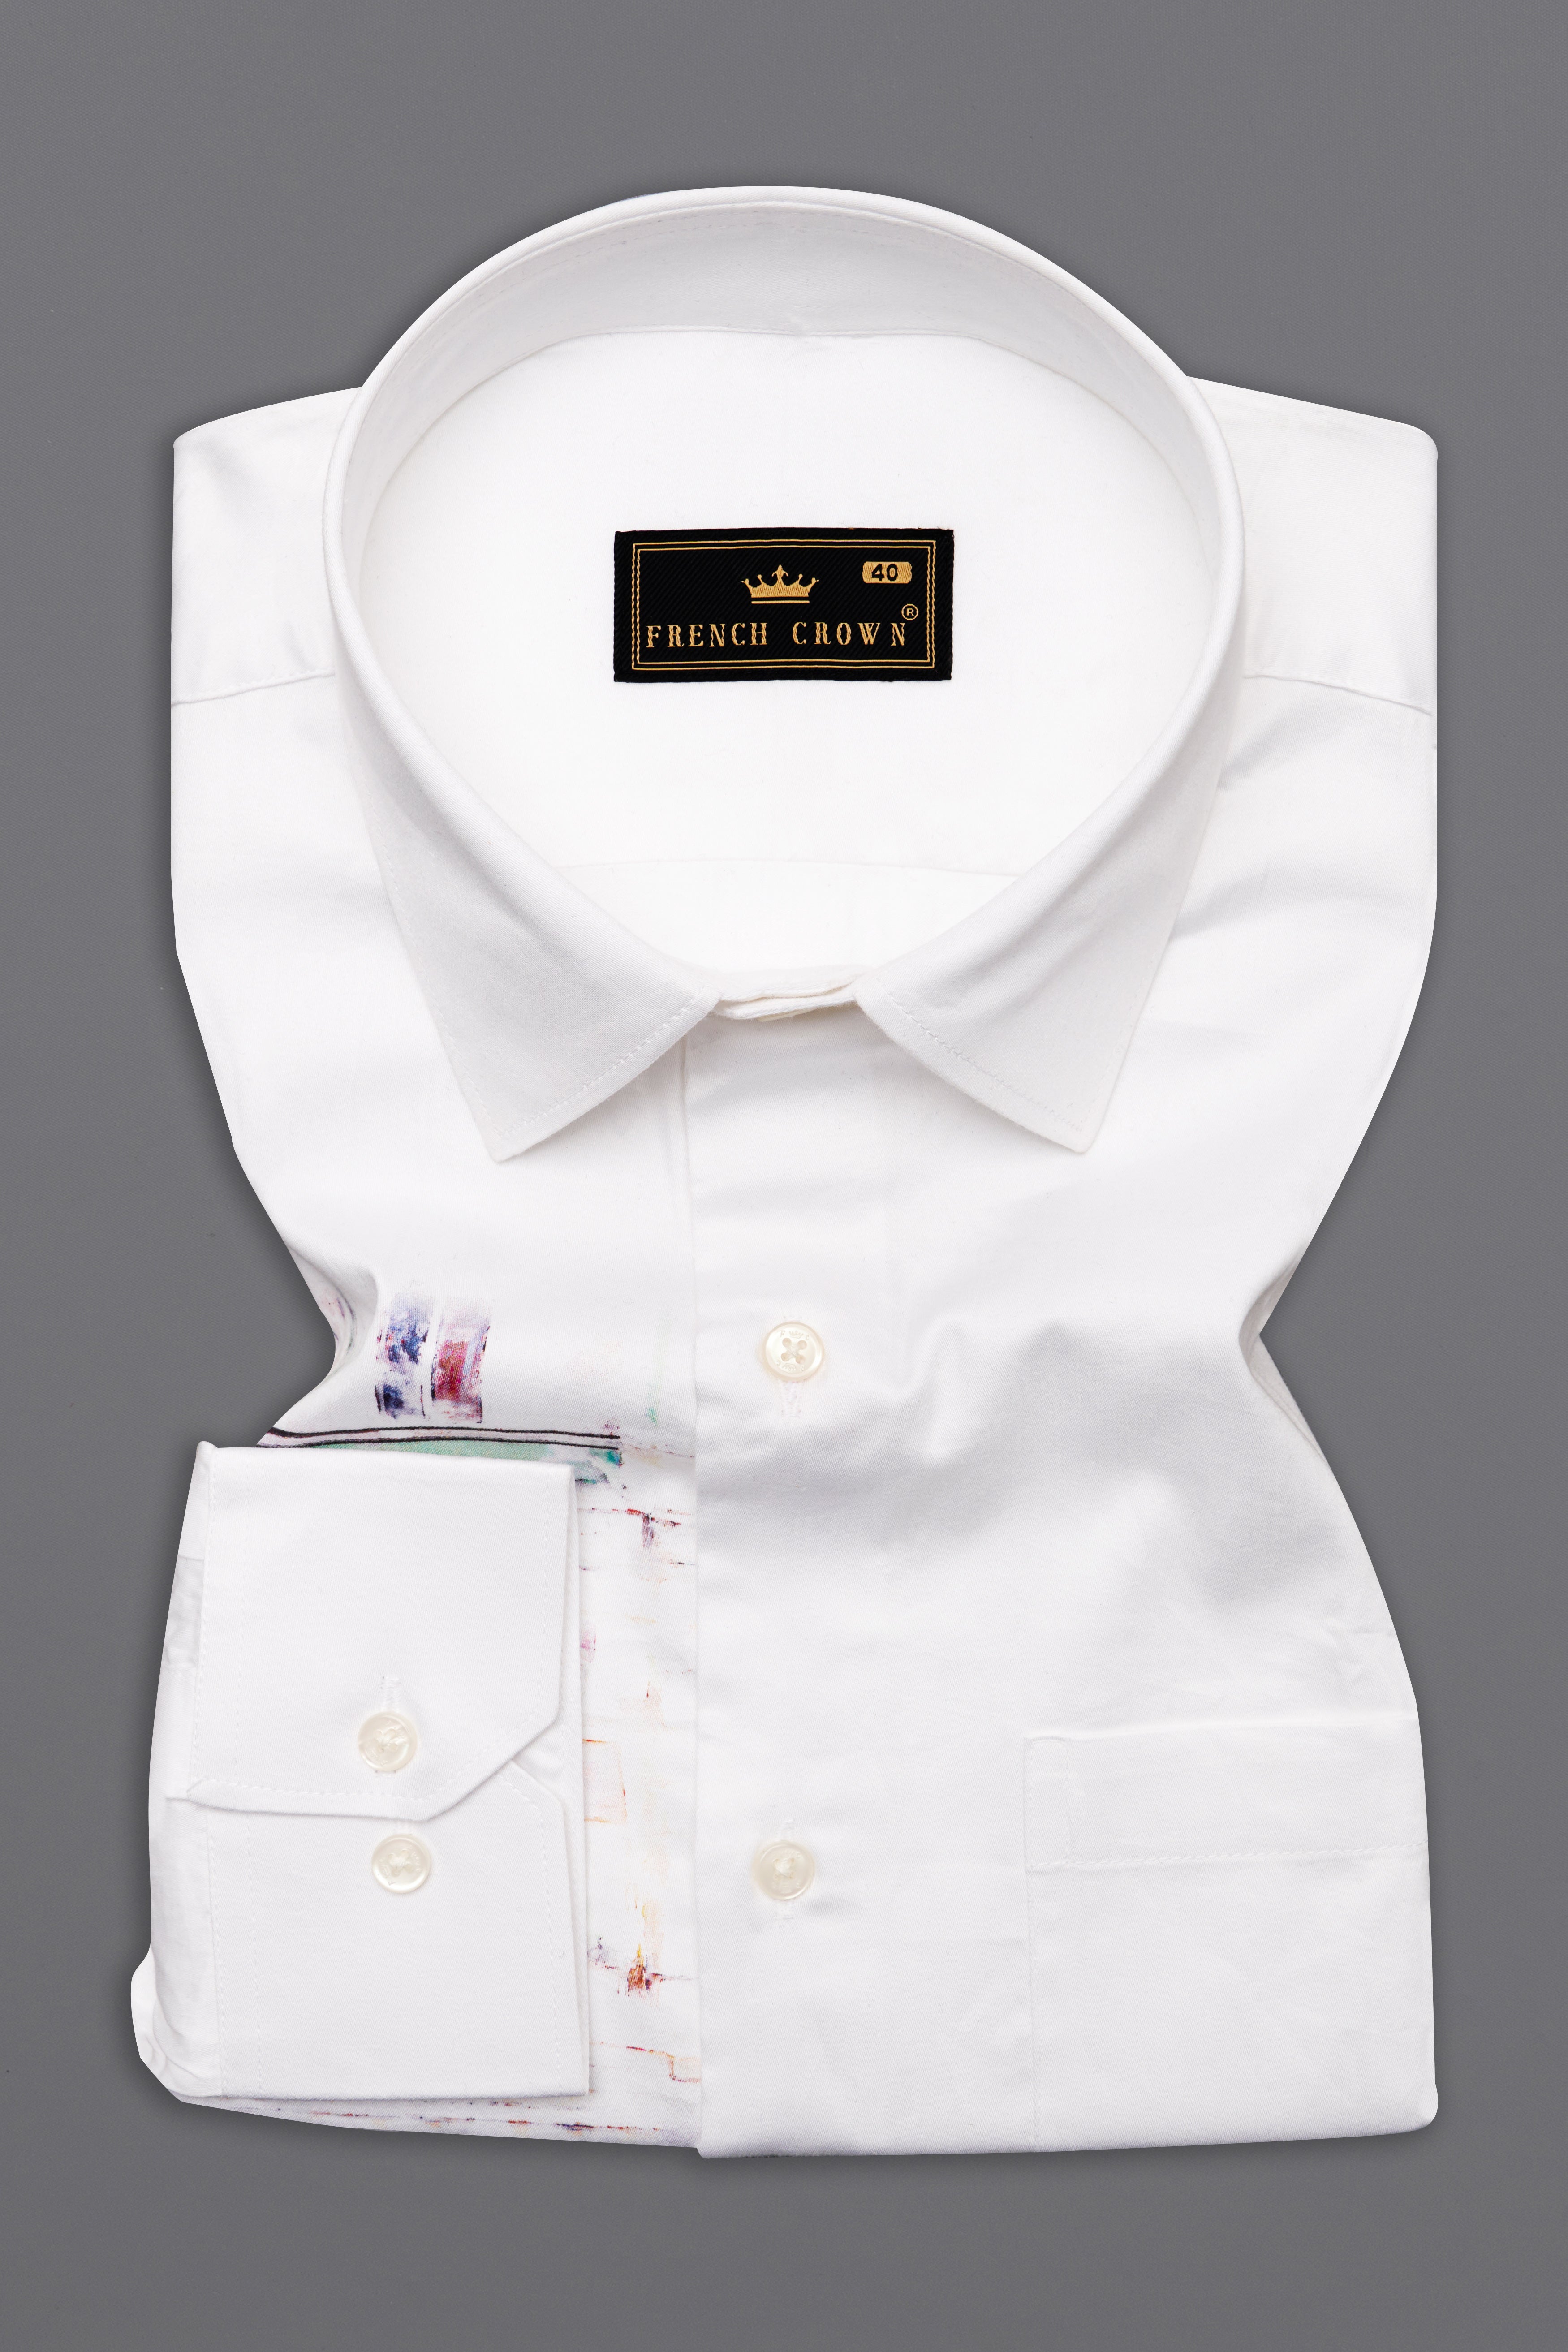 Bright White Printed Super Soft Premium Cotton Designer Shirt 10172-38, 10172-H-38, 10172-39, 10172-H-39, 10172-40, 10172-H-40, 10172-42, 10172-H-42, 10172-44, 10172-H-44, 10172-46, 10172-H-46, 10172-48, 10172-H-48, 10172-50, 10172-H-50, 10172-52, 10172-H-52